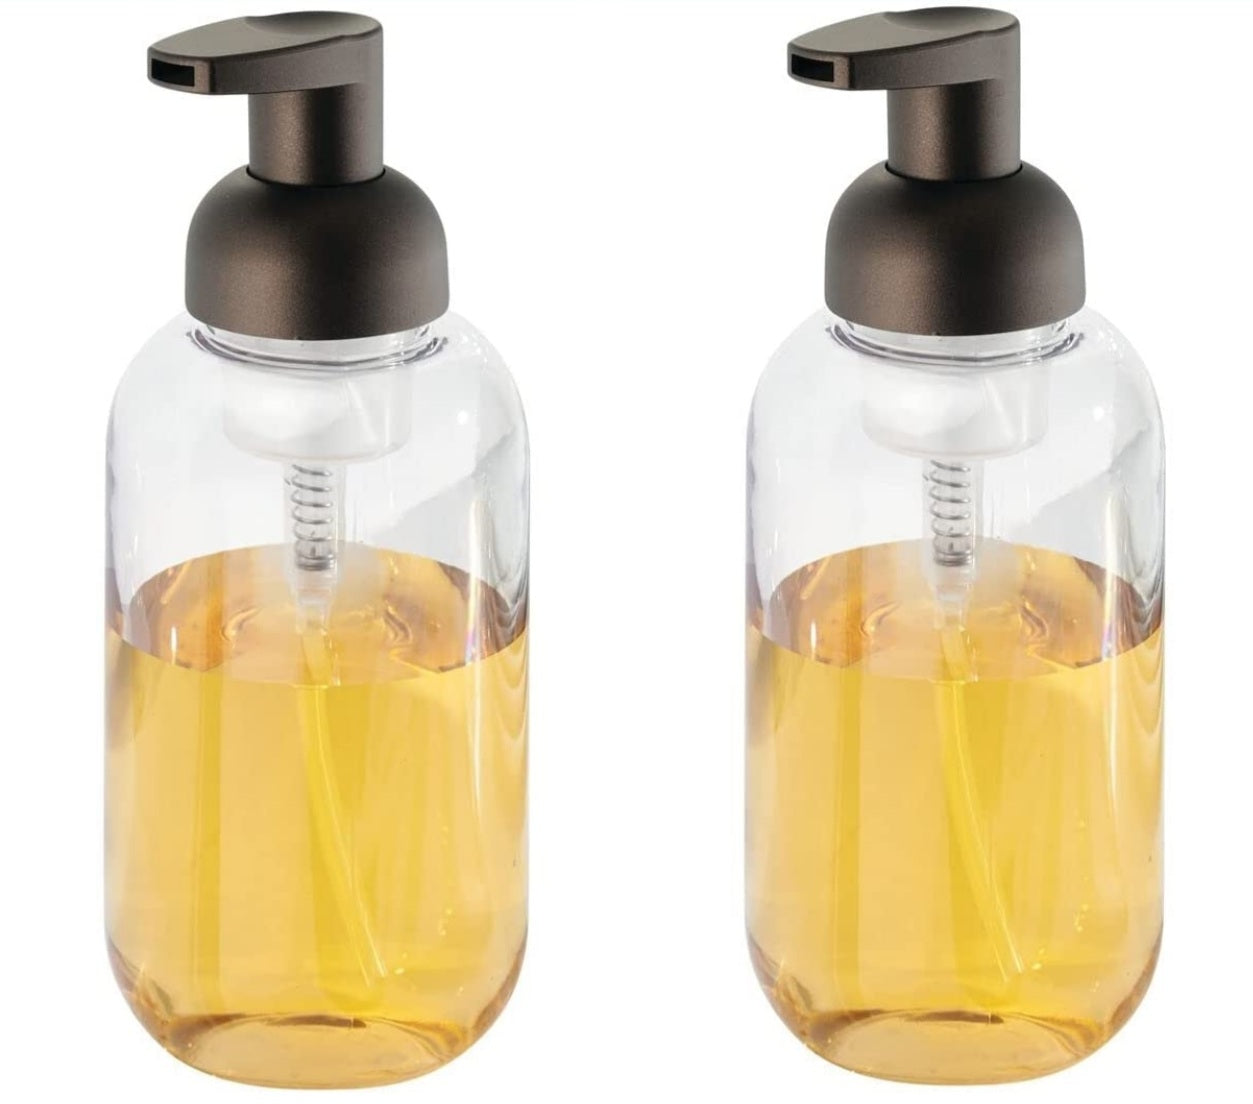 mDesign Foaming Soap Dispenser Pump Bottle for Bathroom Vanities or Kitchen Sink, Countertops (Set of 2)